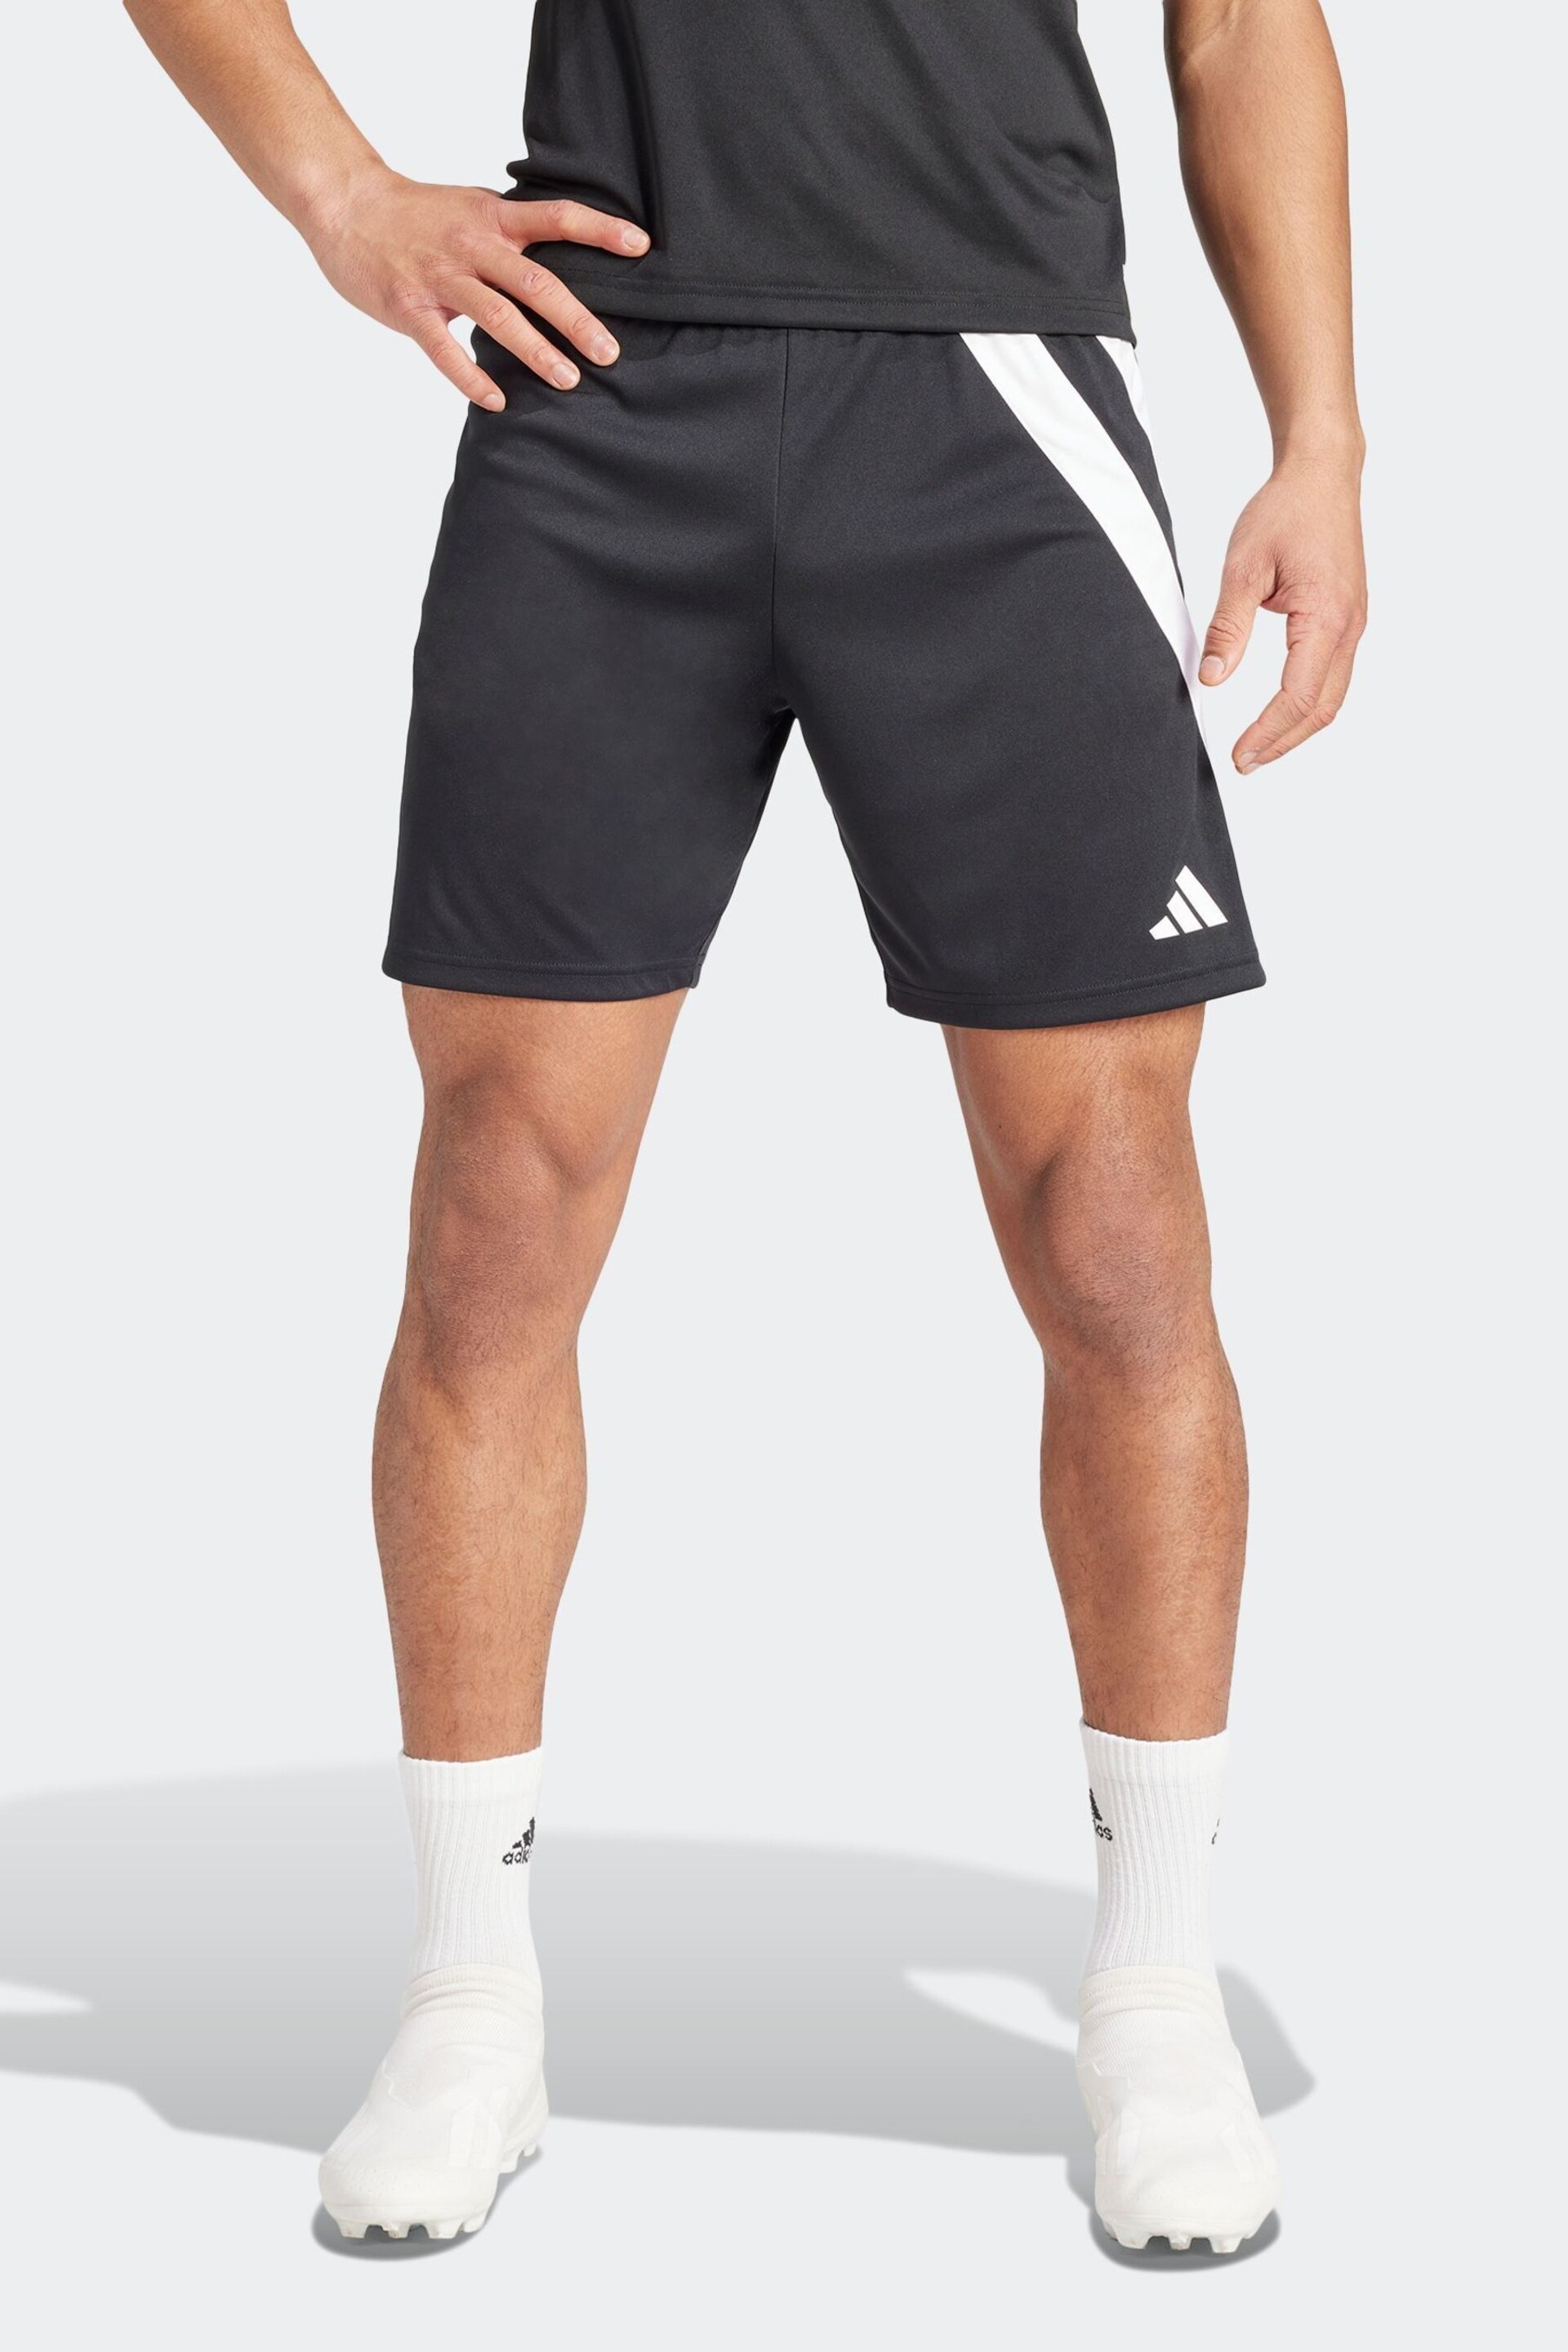 adidas Dark Black Fortore 23 Shorts - Image 1 of 4